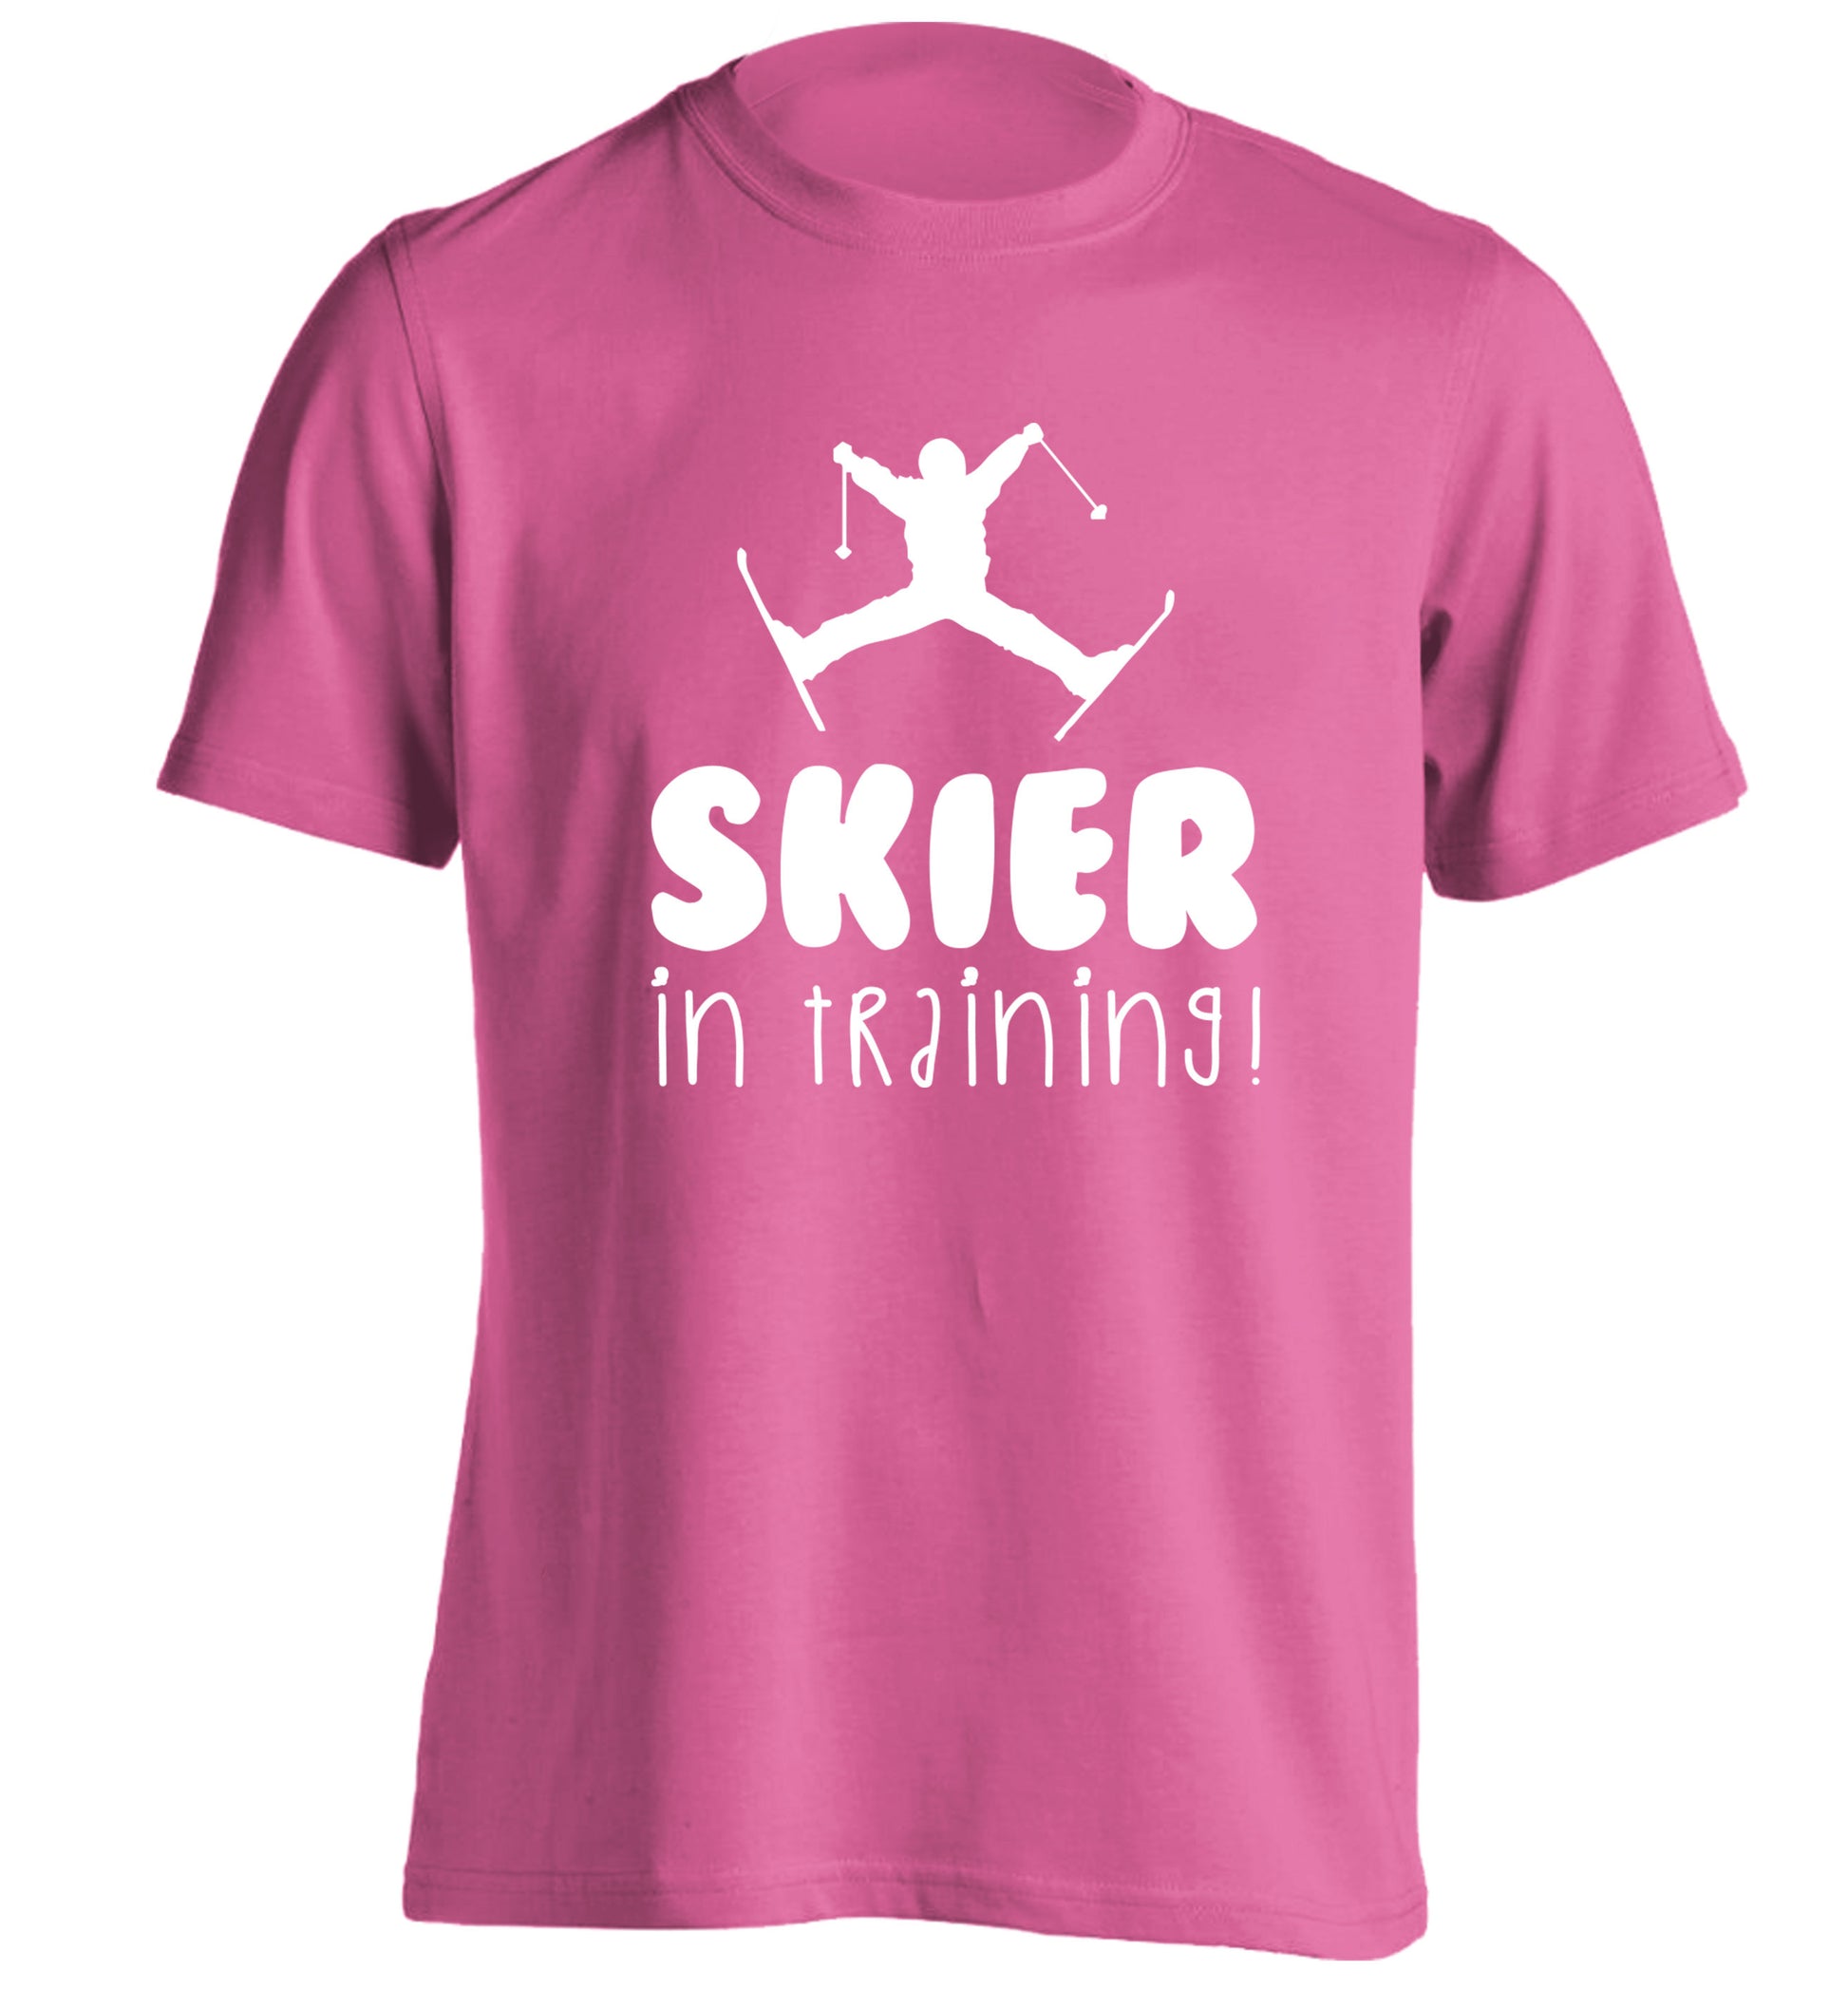 Skier in training adults unisex pink Tshirt 2XL